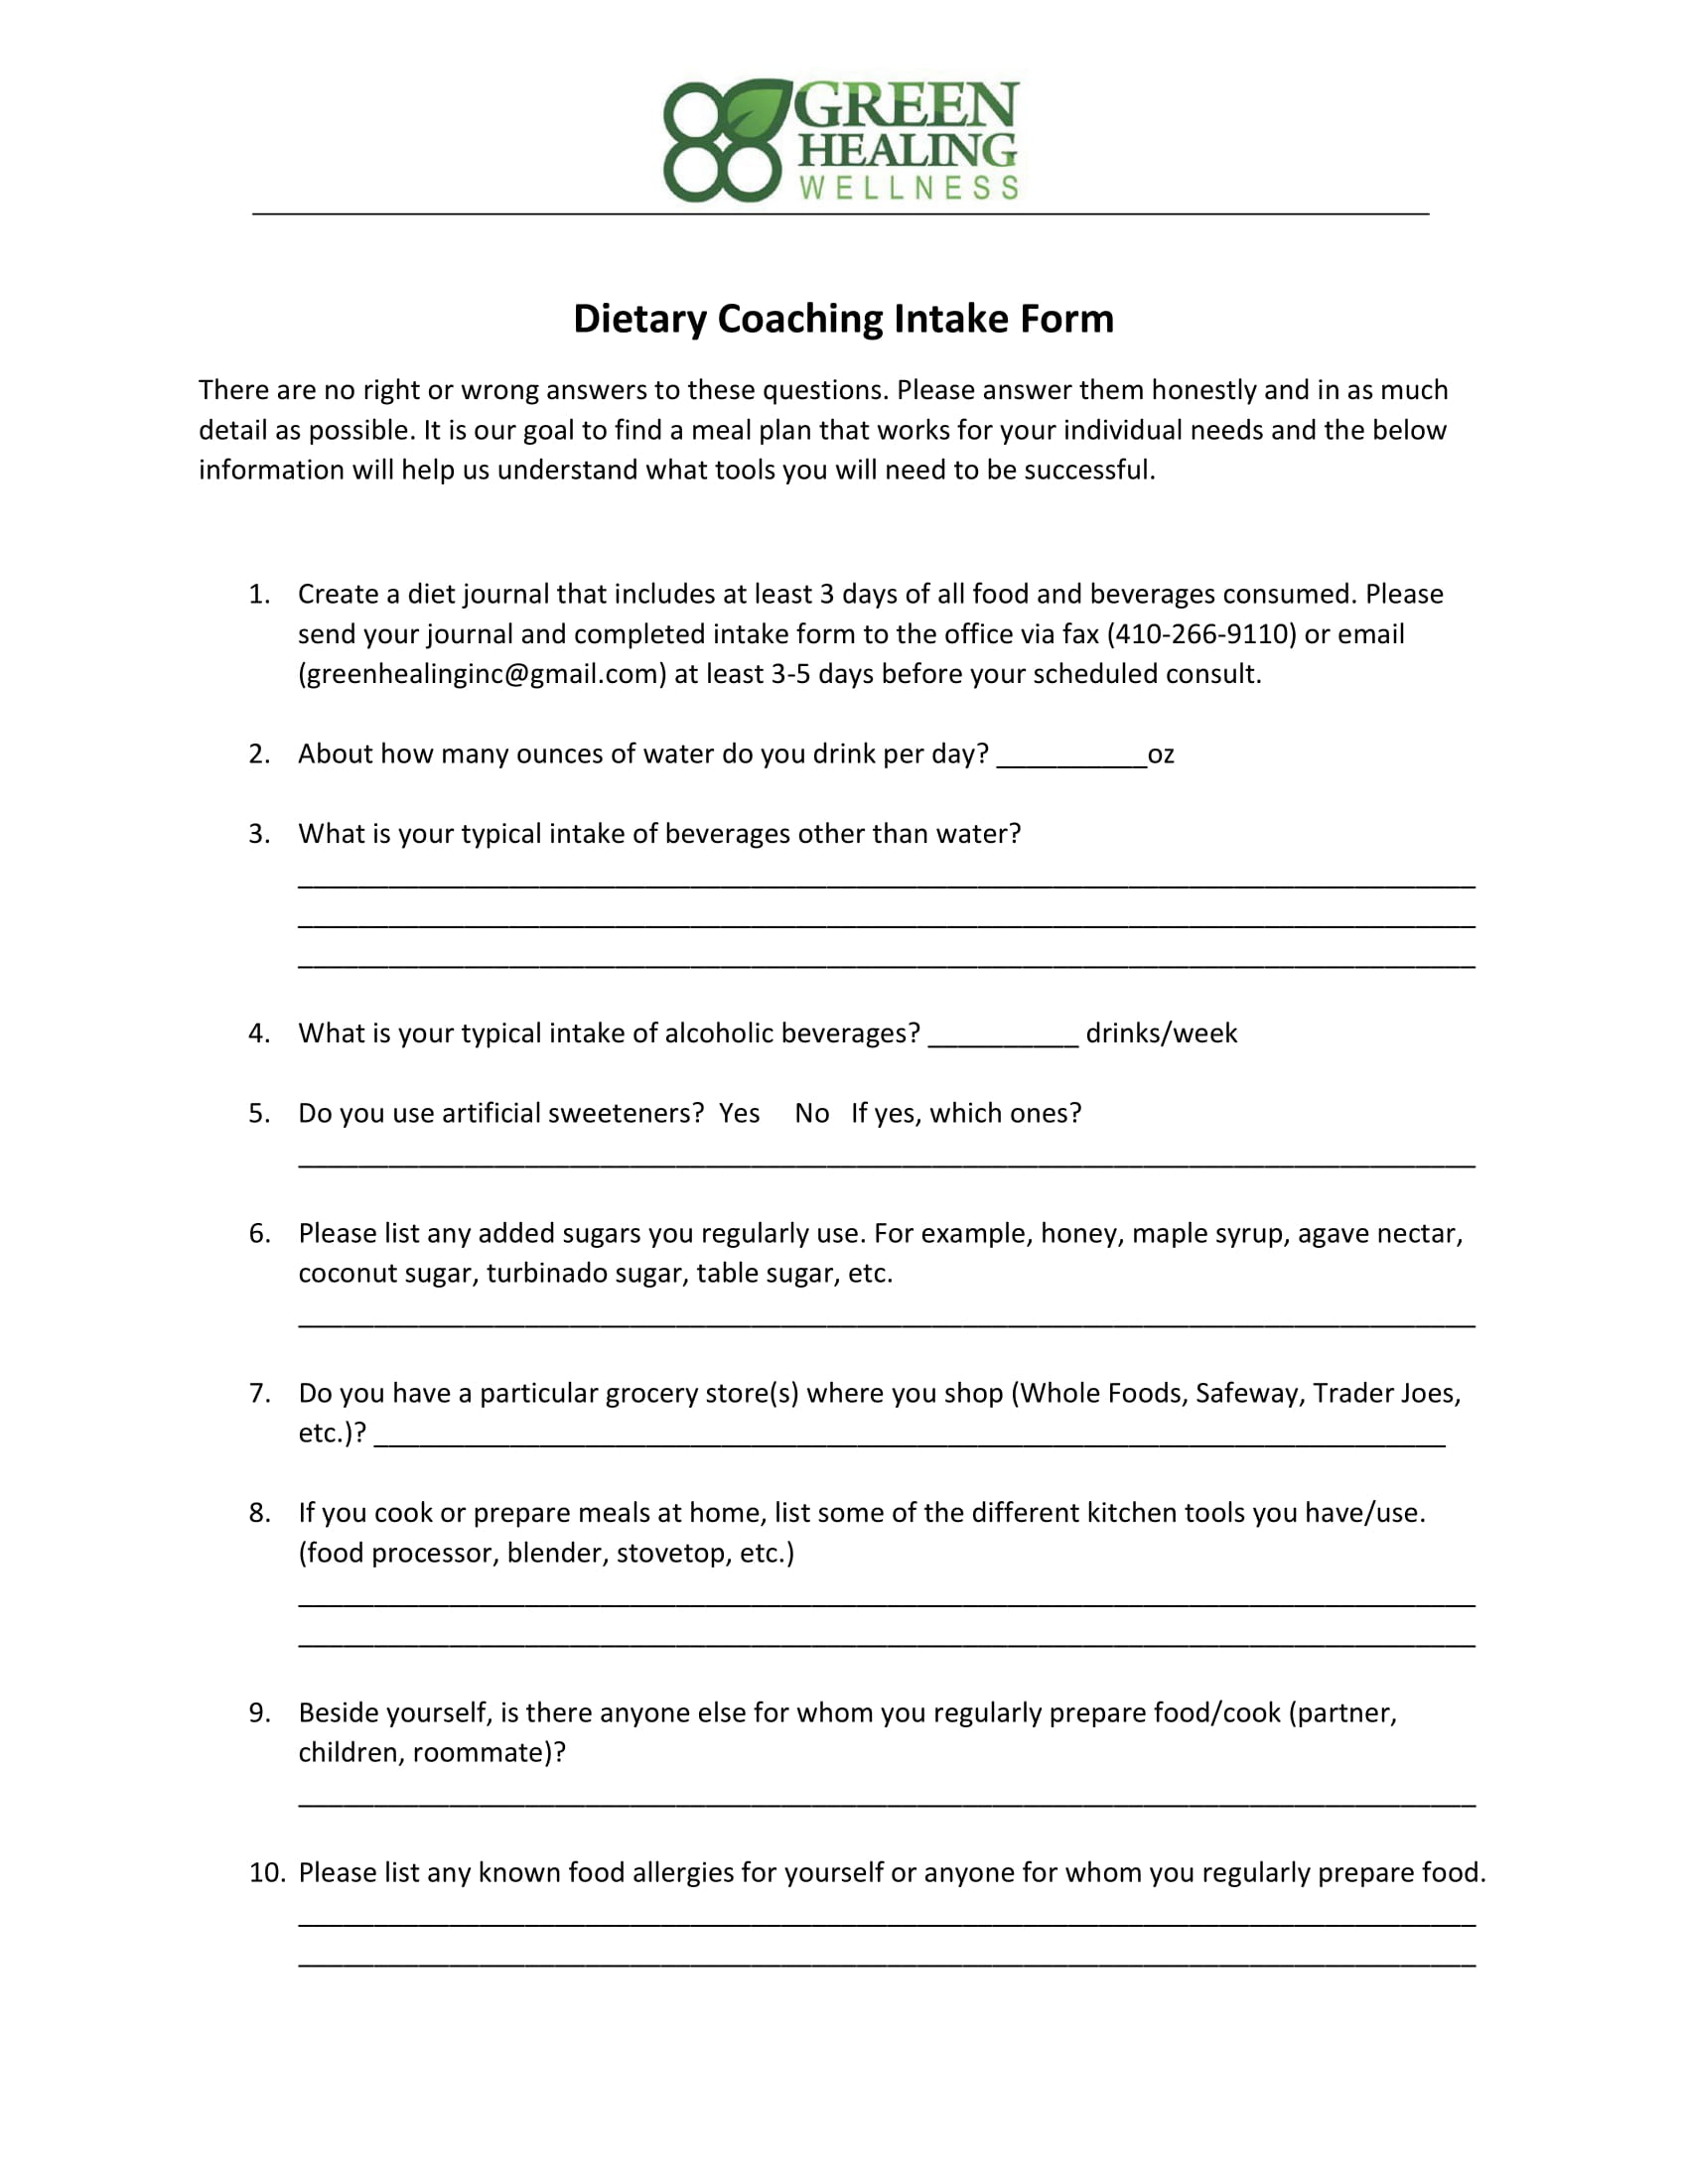 dietary coaching intake form 1